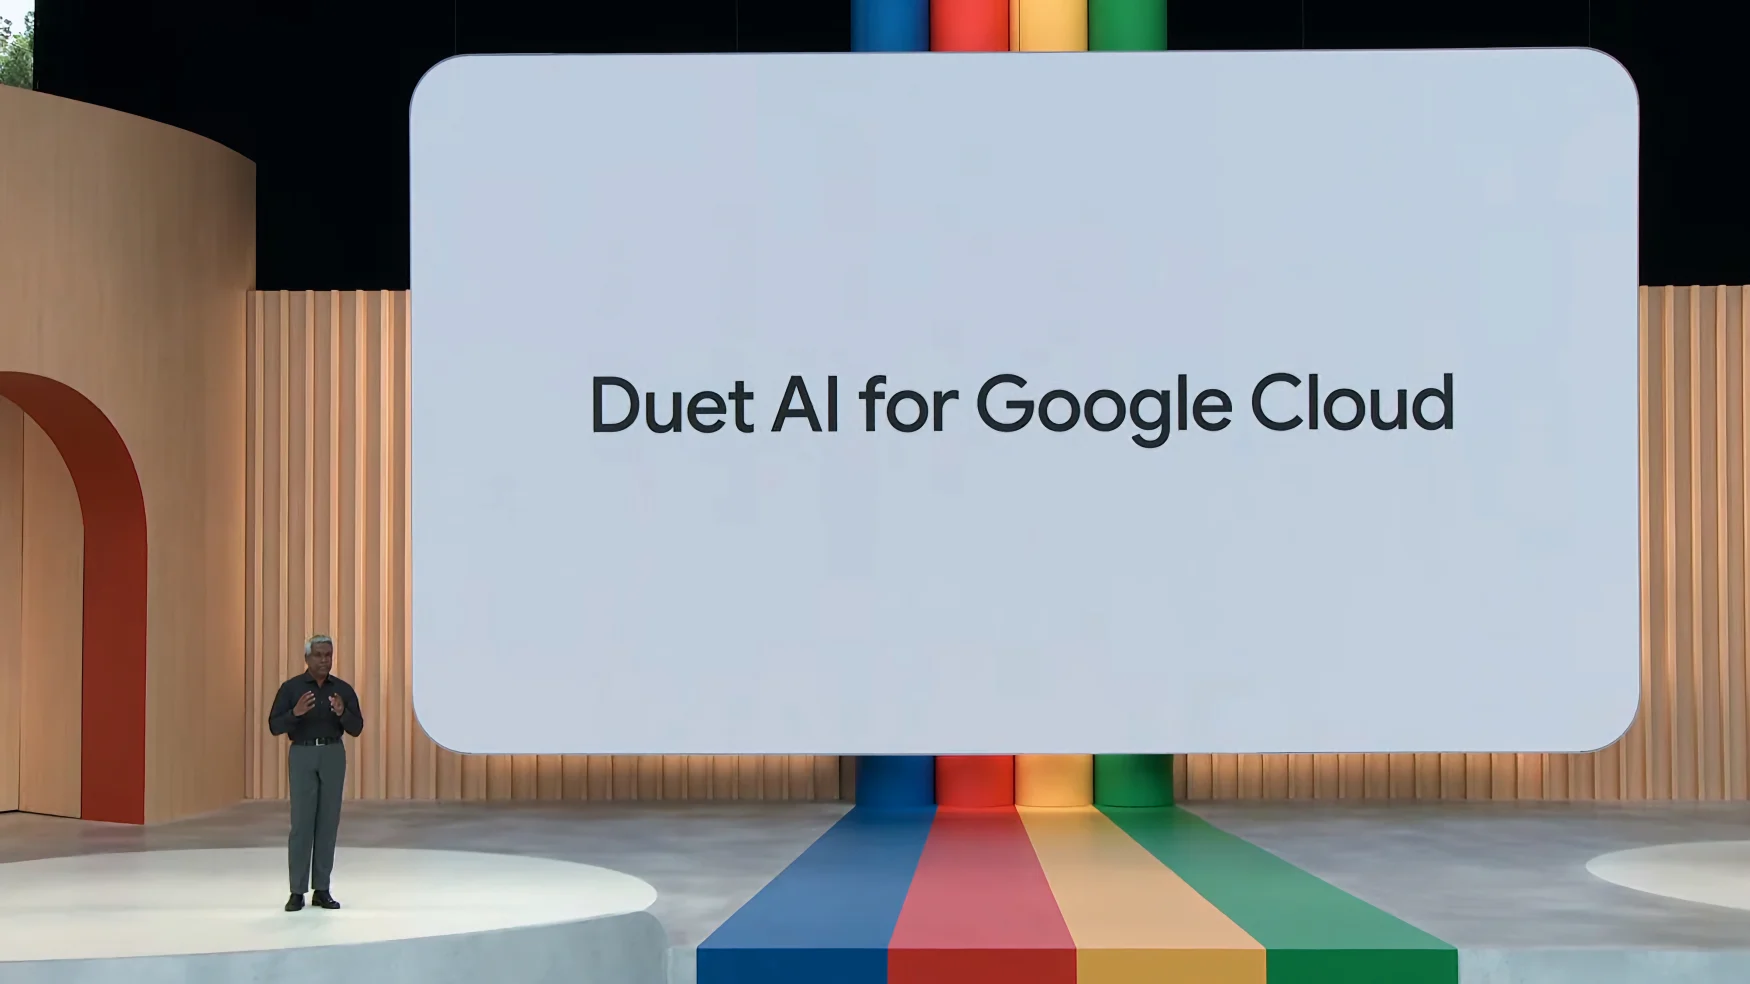 Thomas Kurian at Google I/O revealing Duet AI for Google Cloud